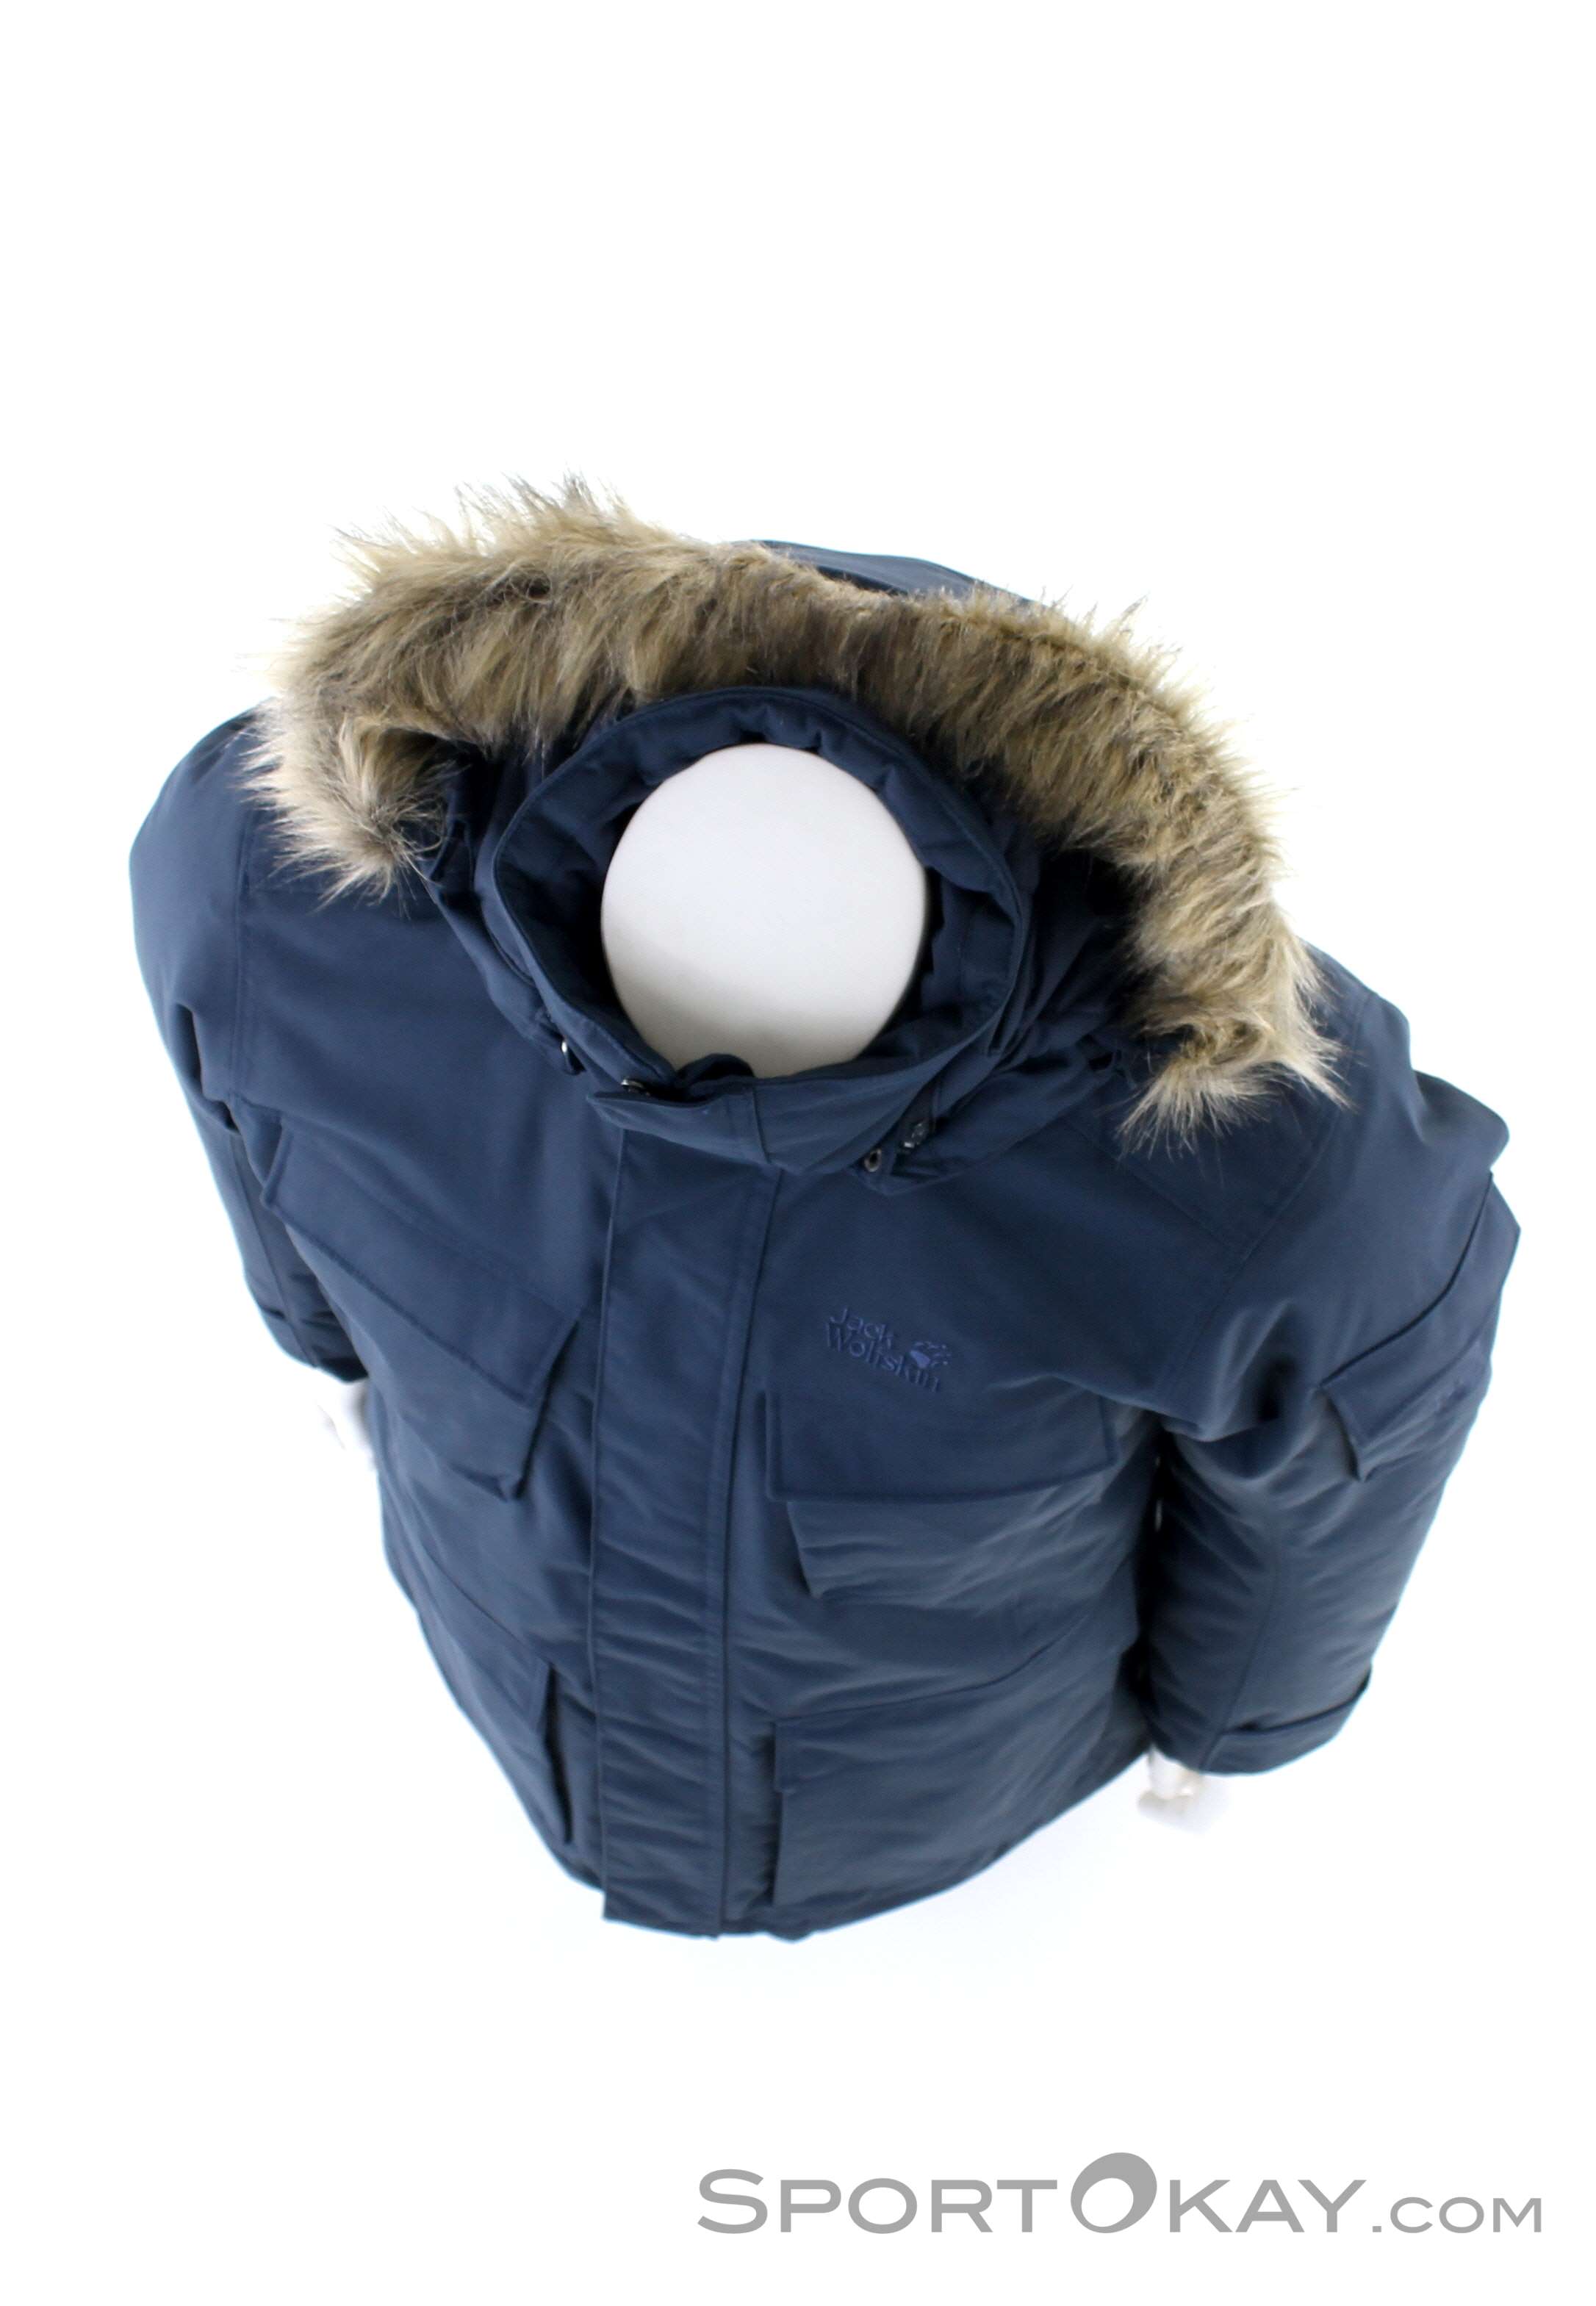 Coat - Glacier Parka - Jackets All Leisure Canyon Fashion - Mens Jack - Clothing Wolfskin